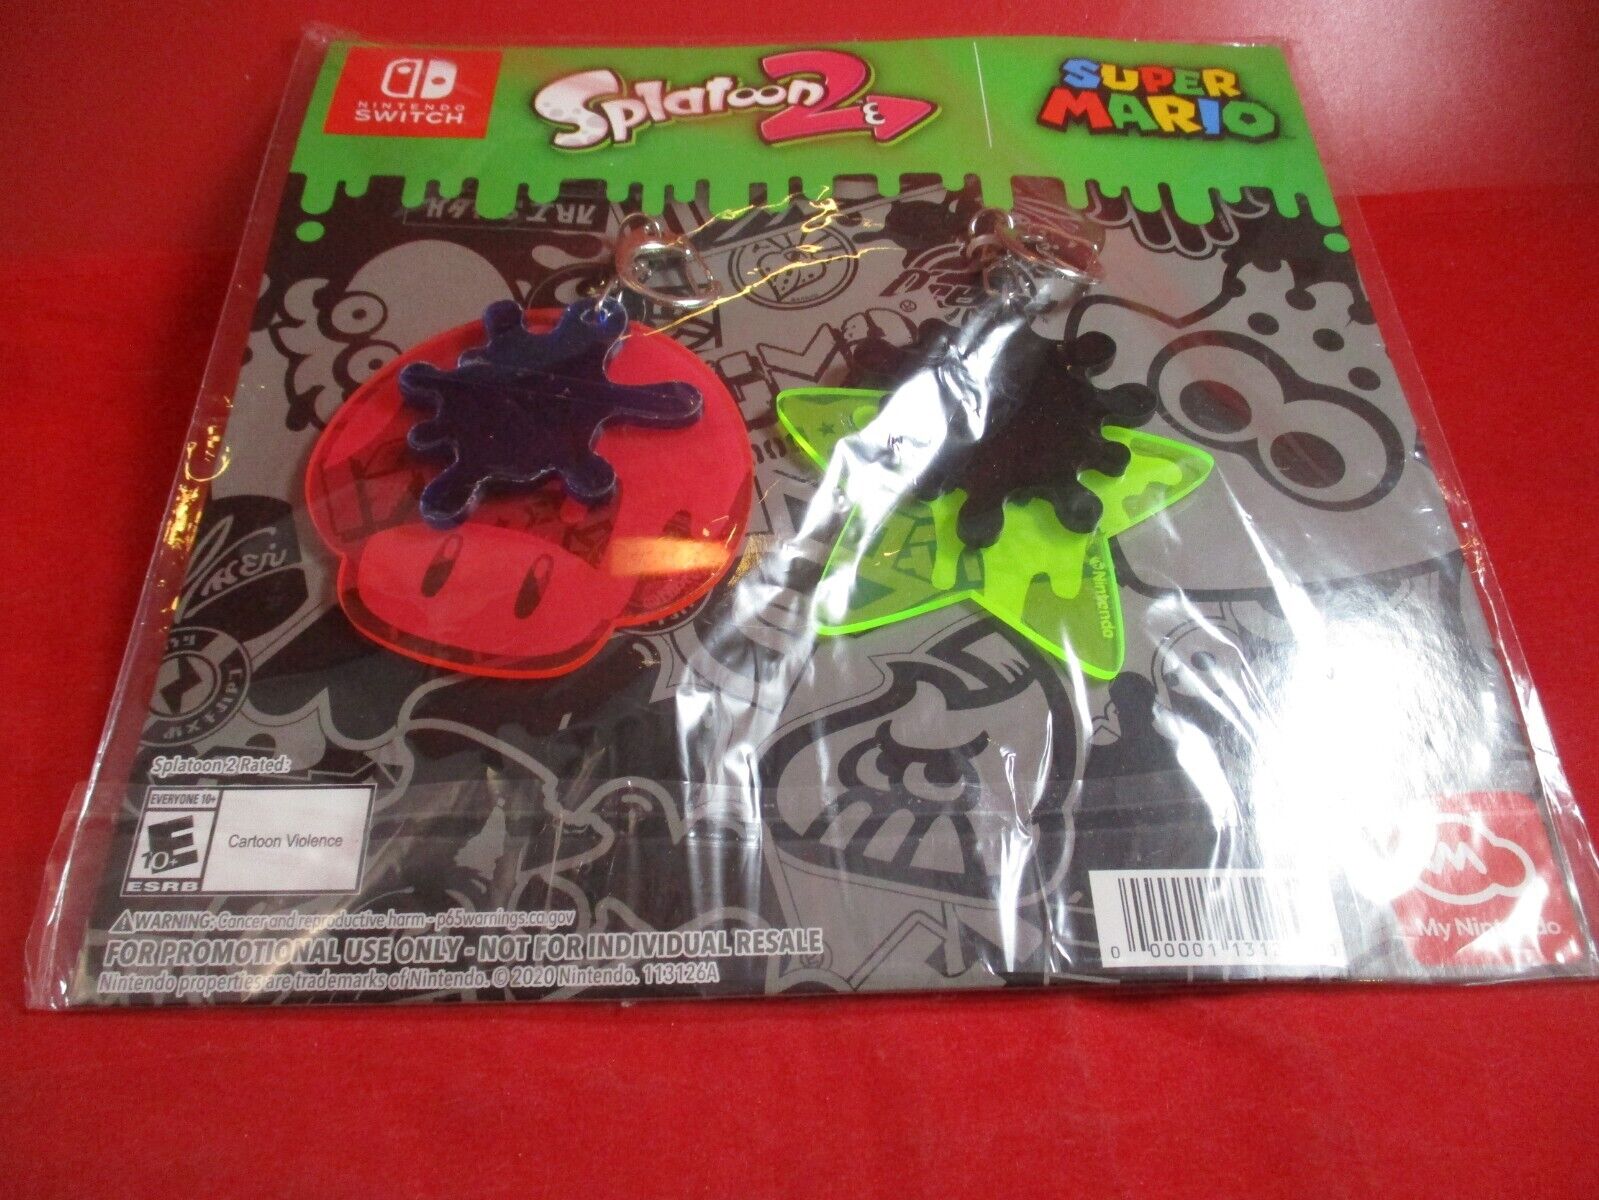 Splatoon 2 / Super Mario Bros. Nintendo Switch My Nintendo Reward Promo Keychain